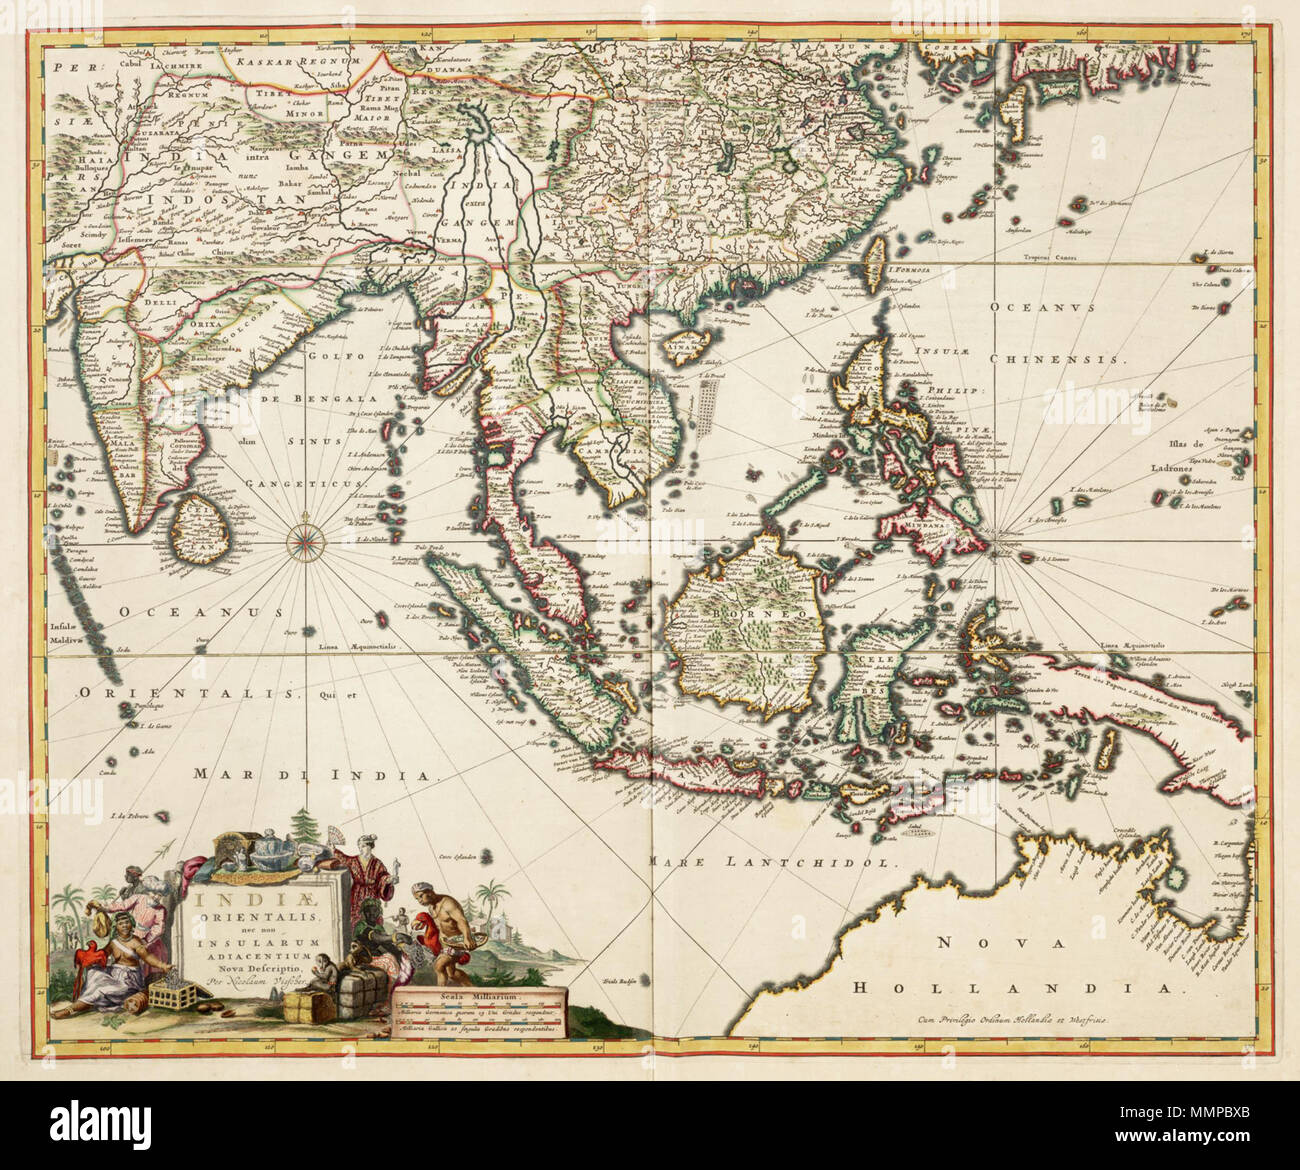 Colonialism in Southeast Asia (Portugal, Spain, Dutch)